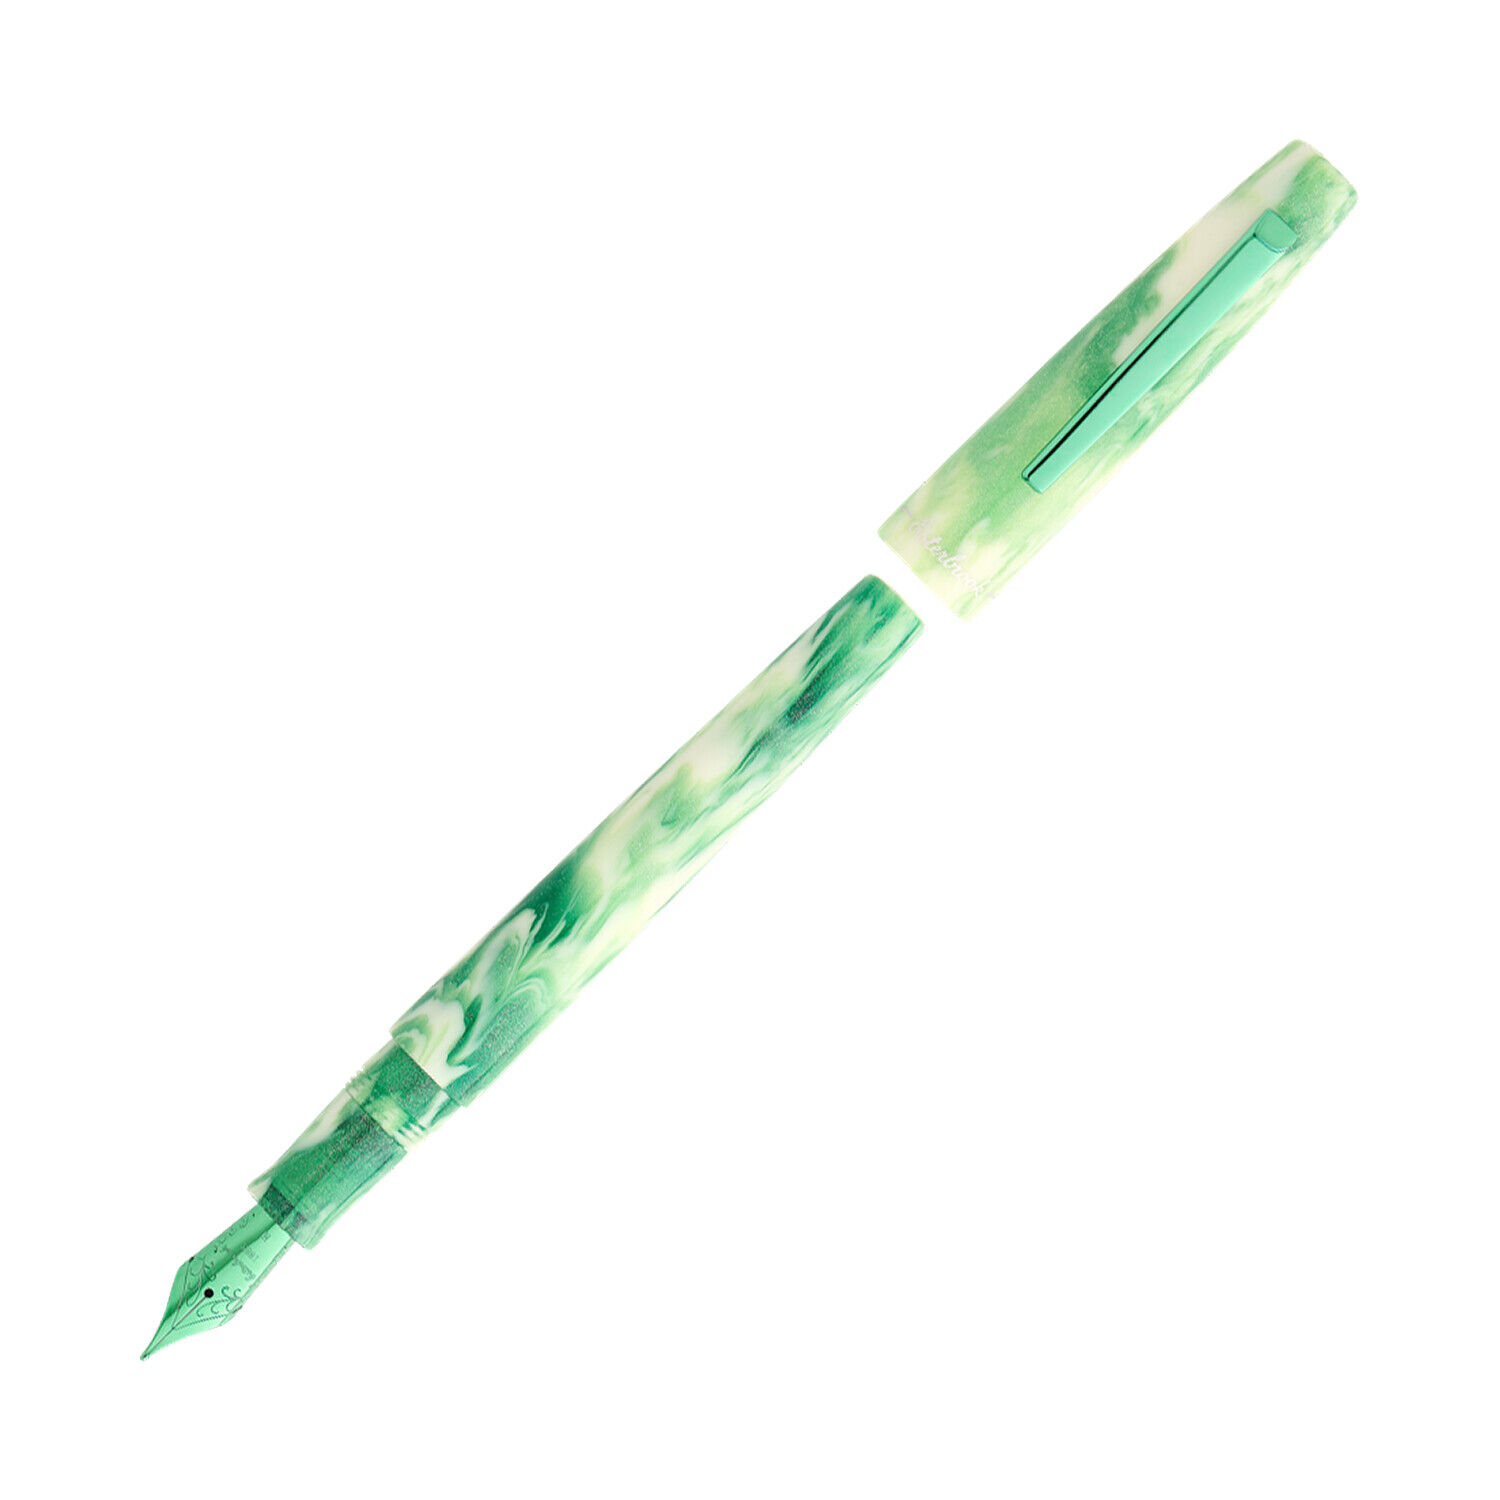 Esterbrook Camden Northern Lights Fountain Pen in Icelandic Green - Extra Fine